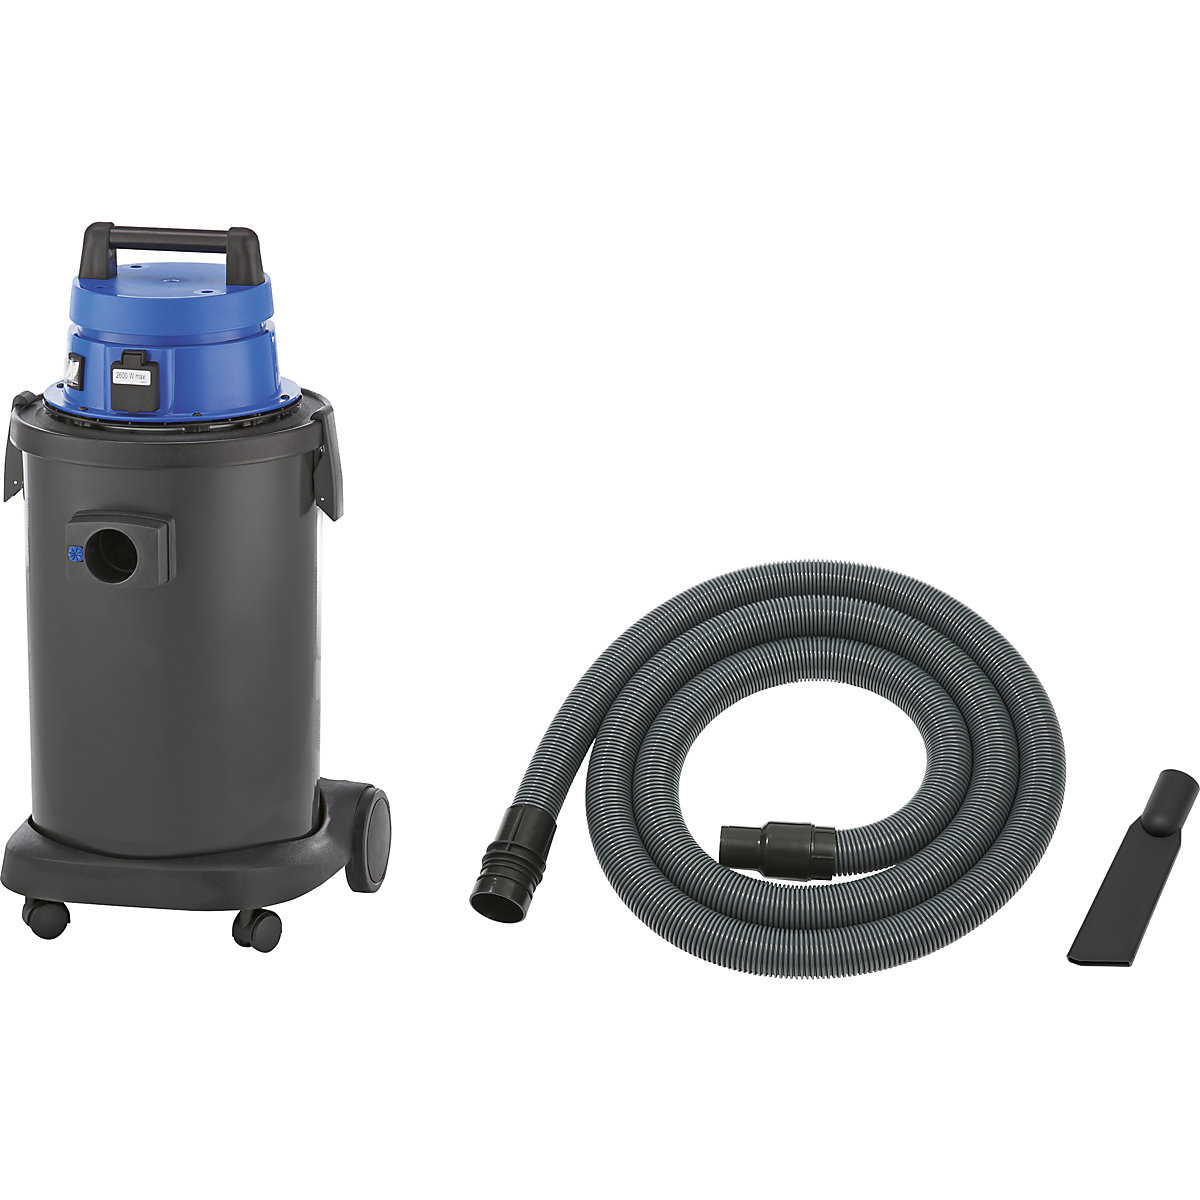 Workshop wet and dry vacuum cleaner – eurokraft pro